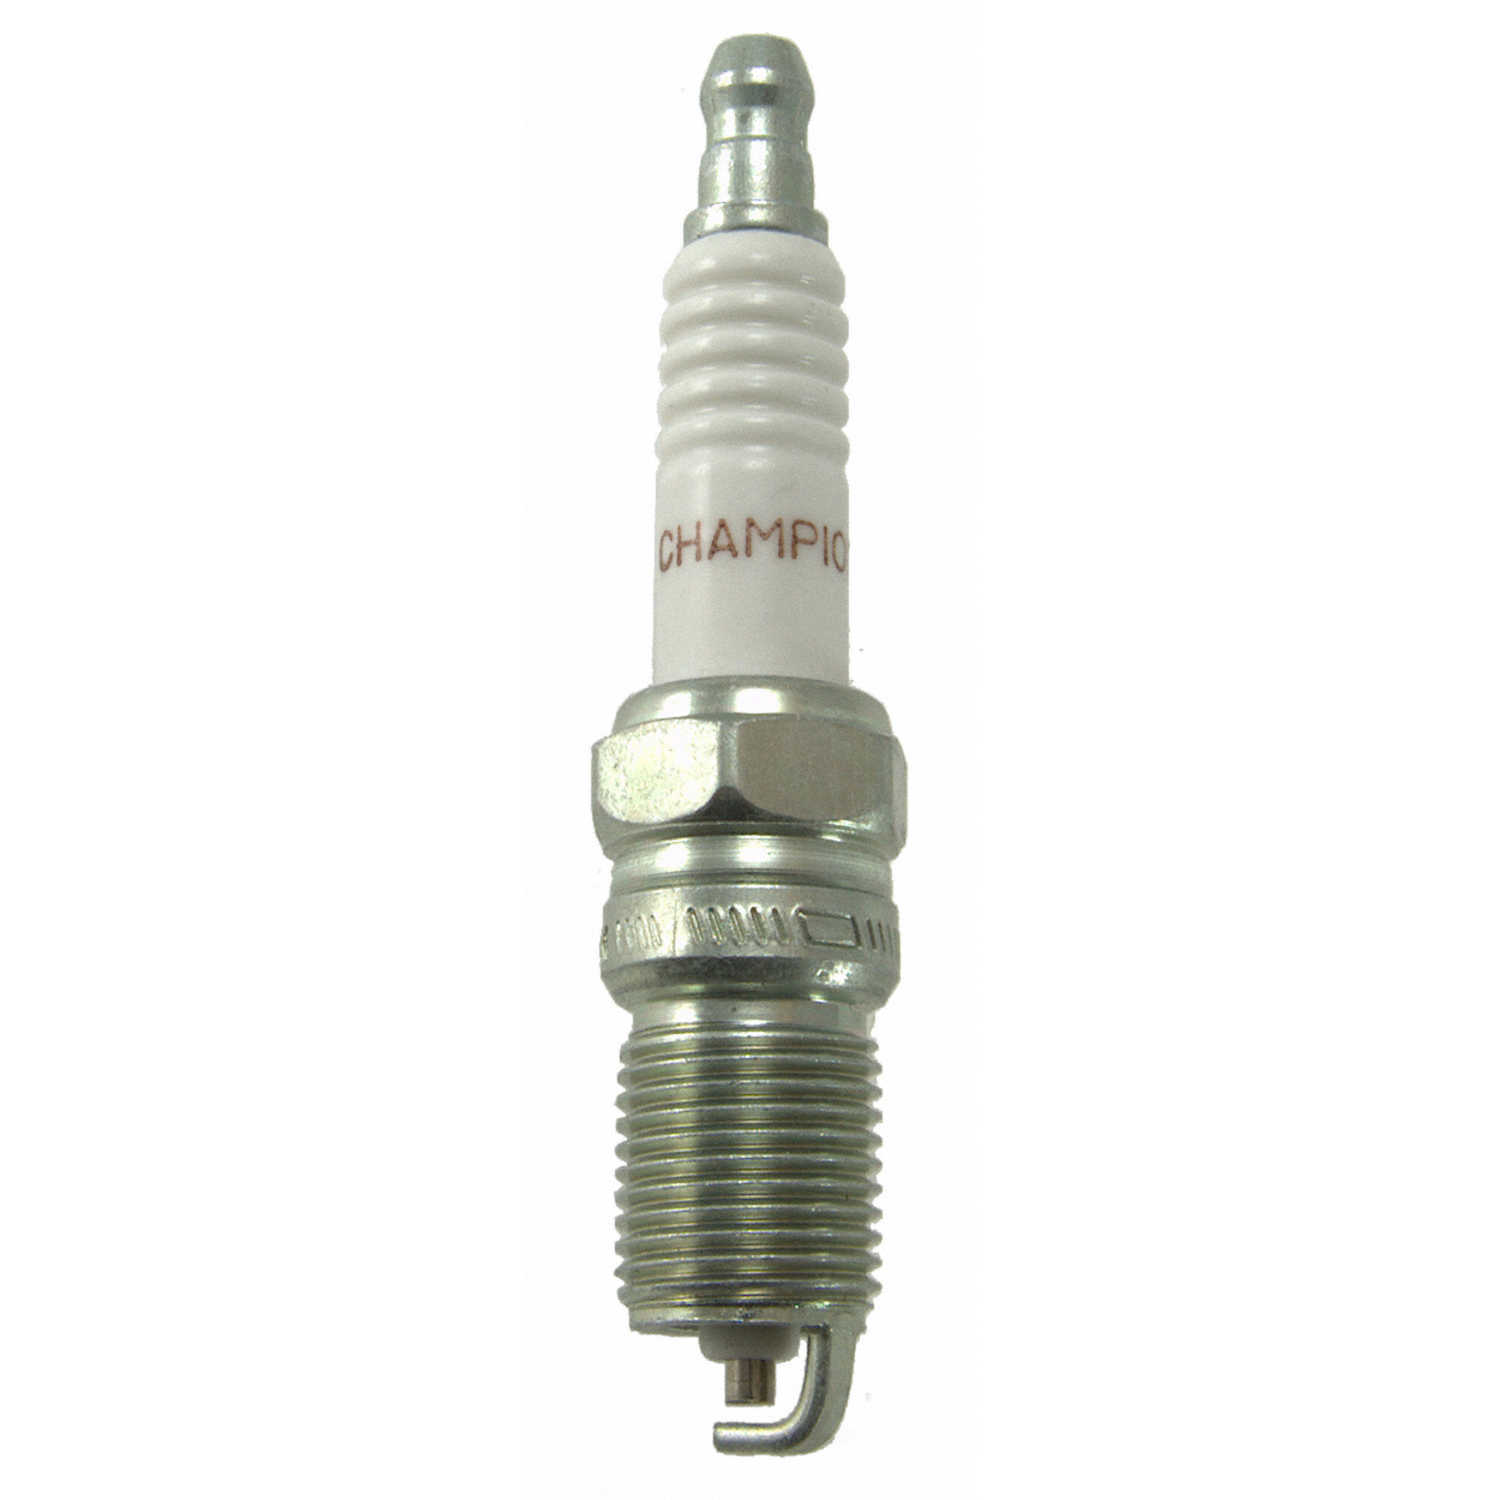 CHAMPION SPARK PLUGS - Copper Plus Spark Plug - CHA 408